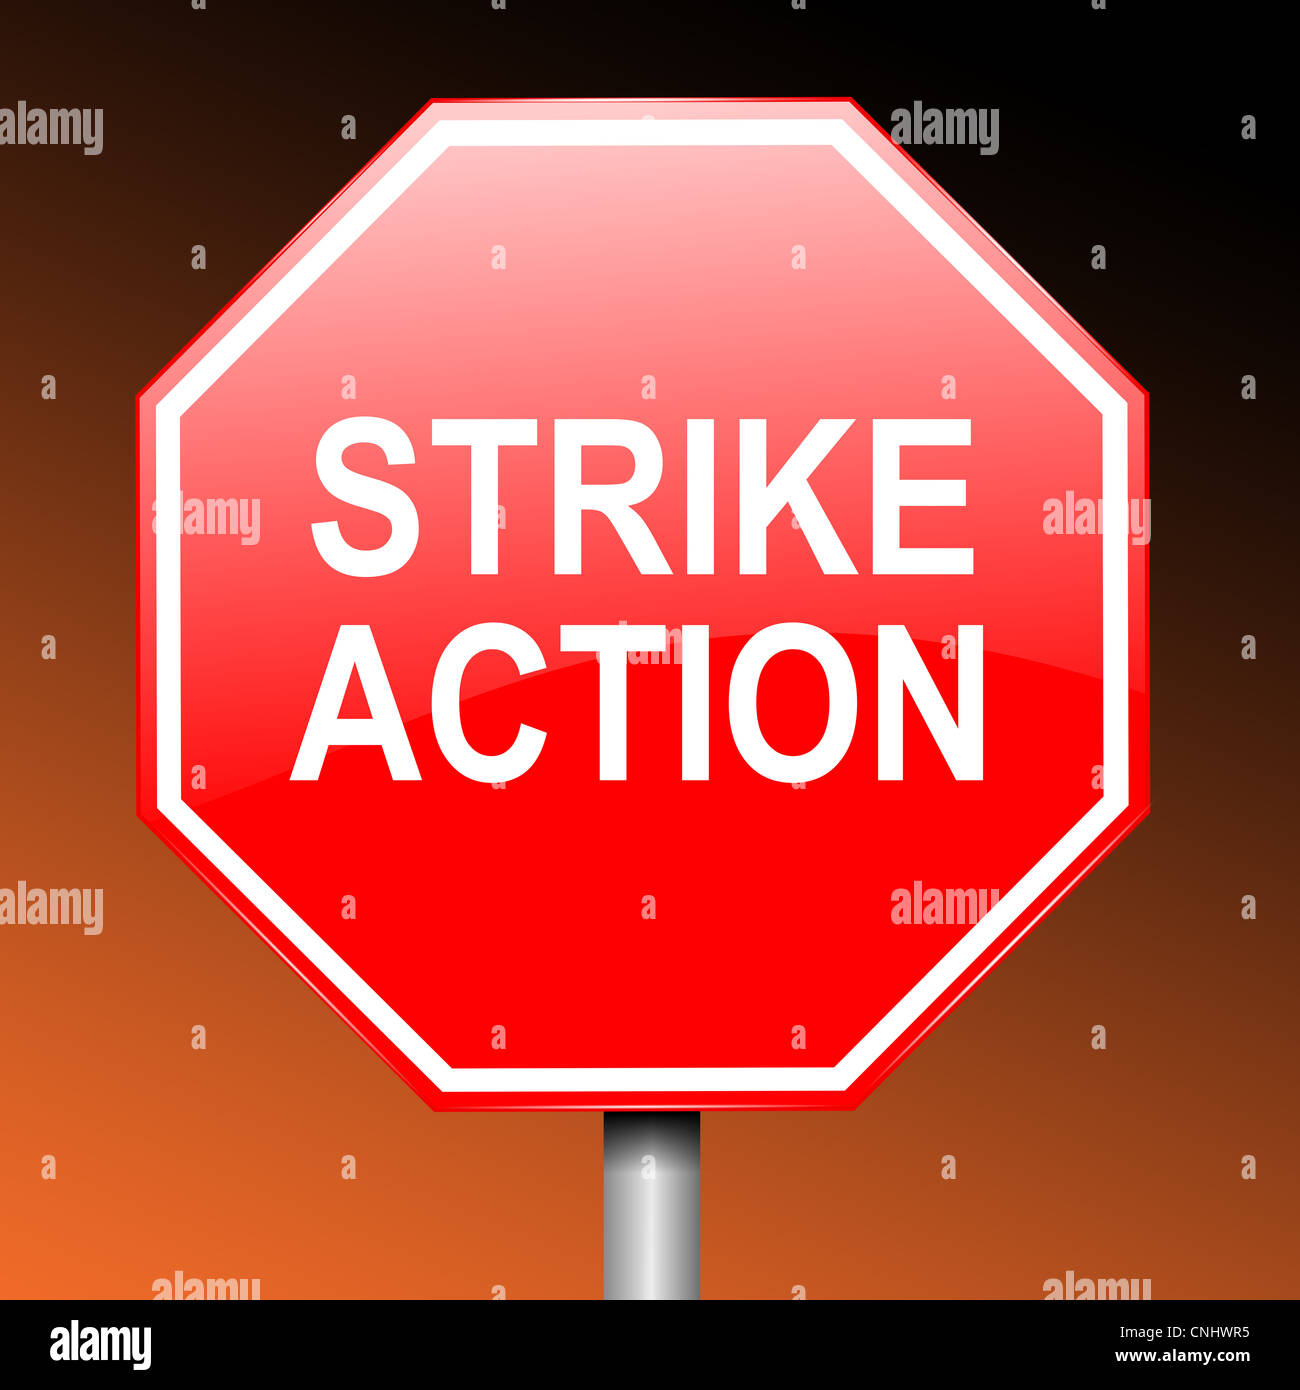 Strike action. Stock Photo